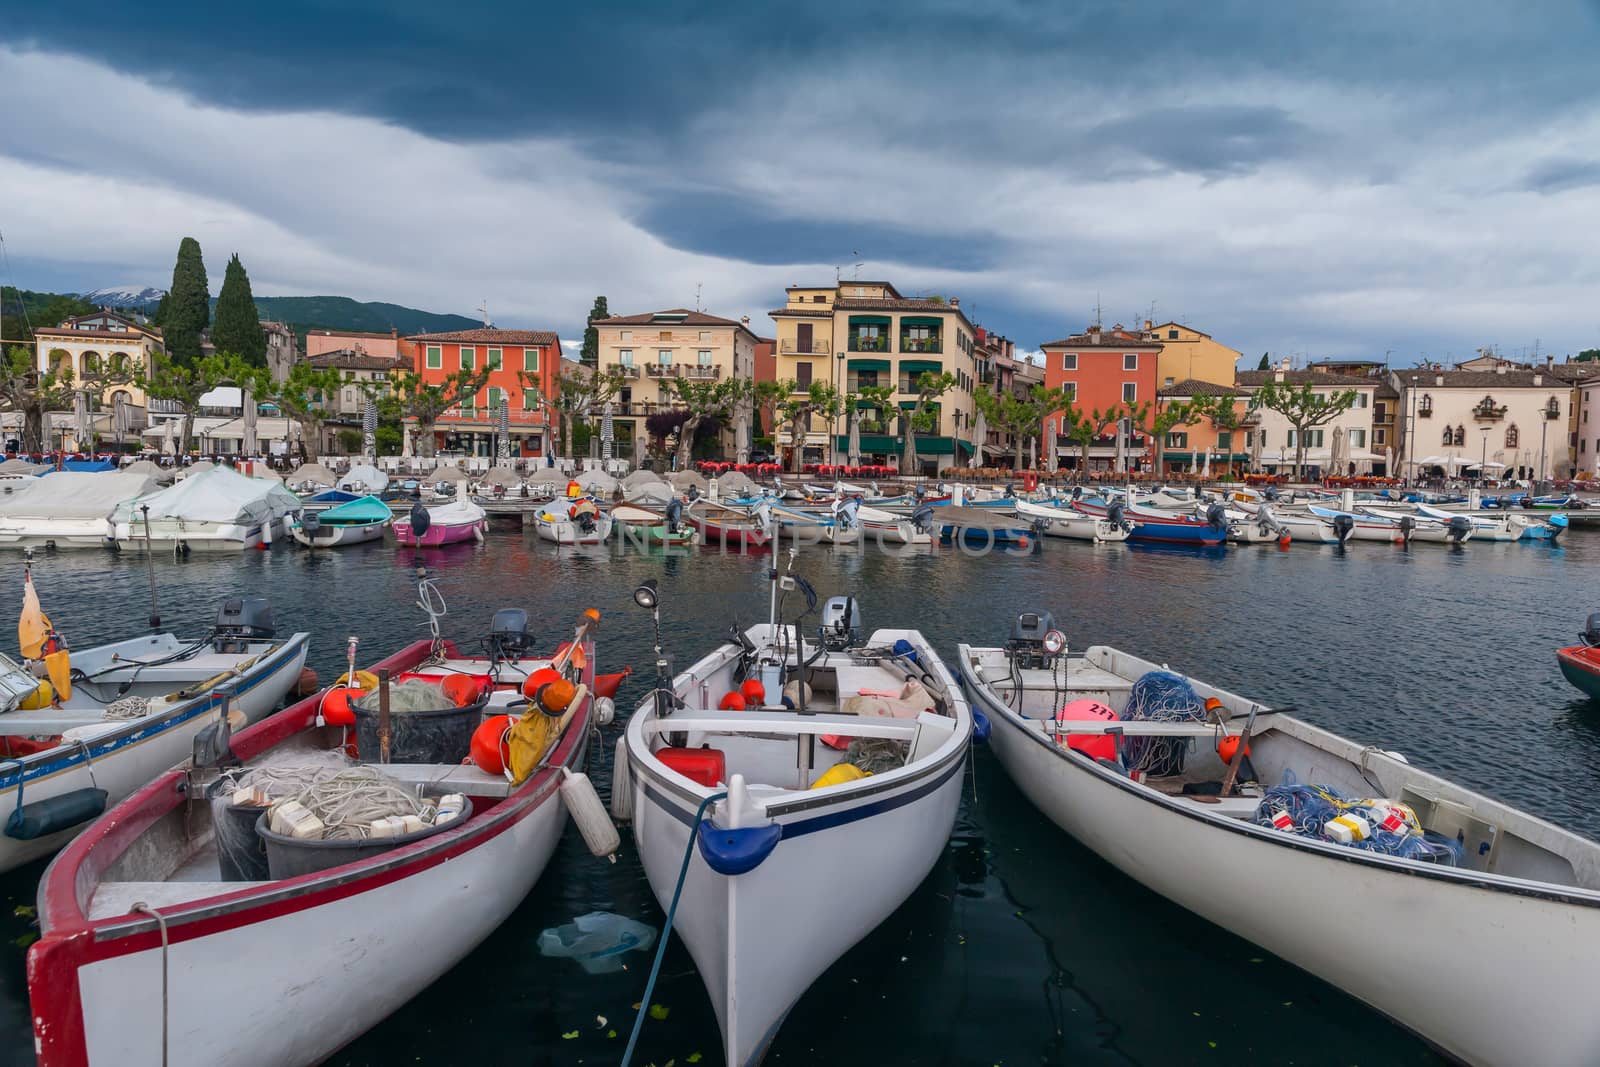 boats in the harbor, Lake Garda by master1305